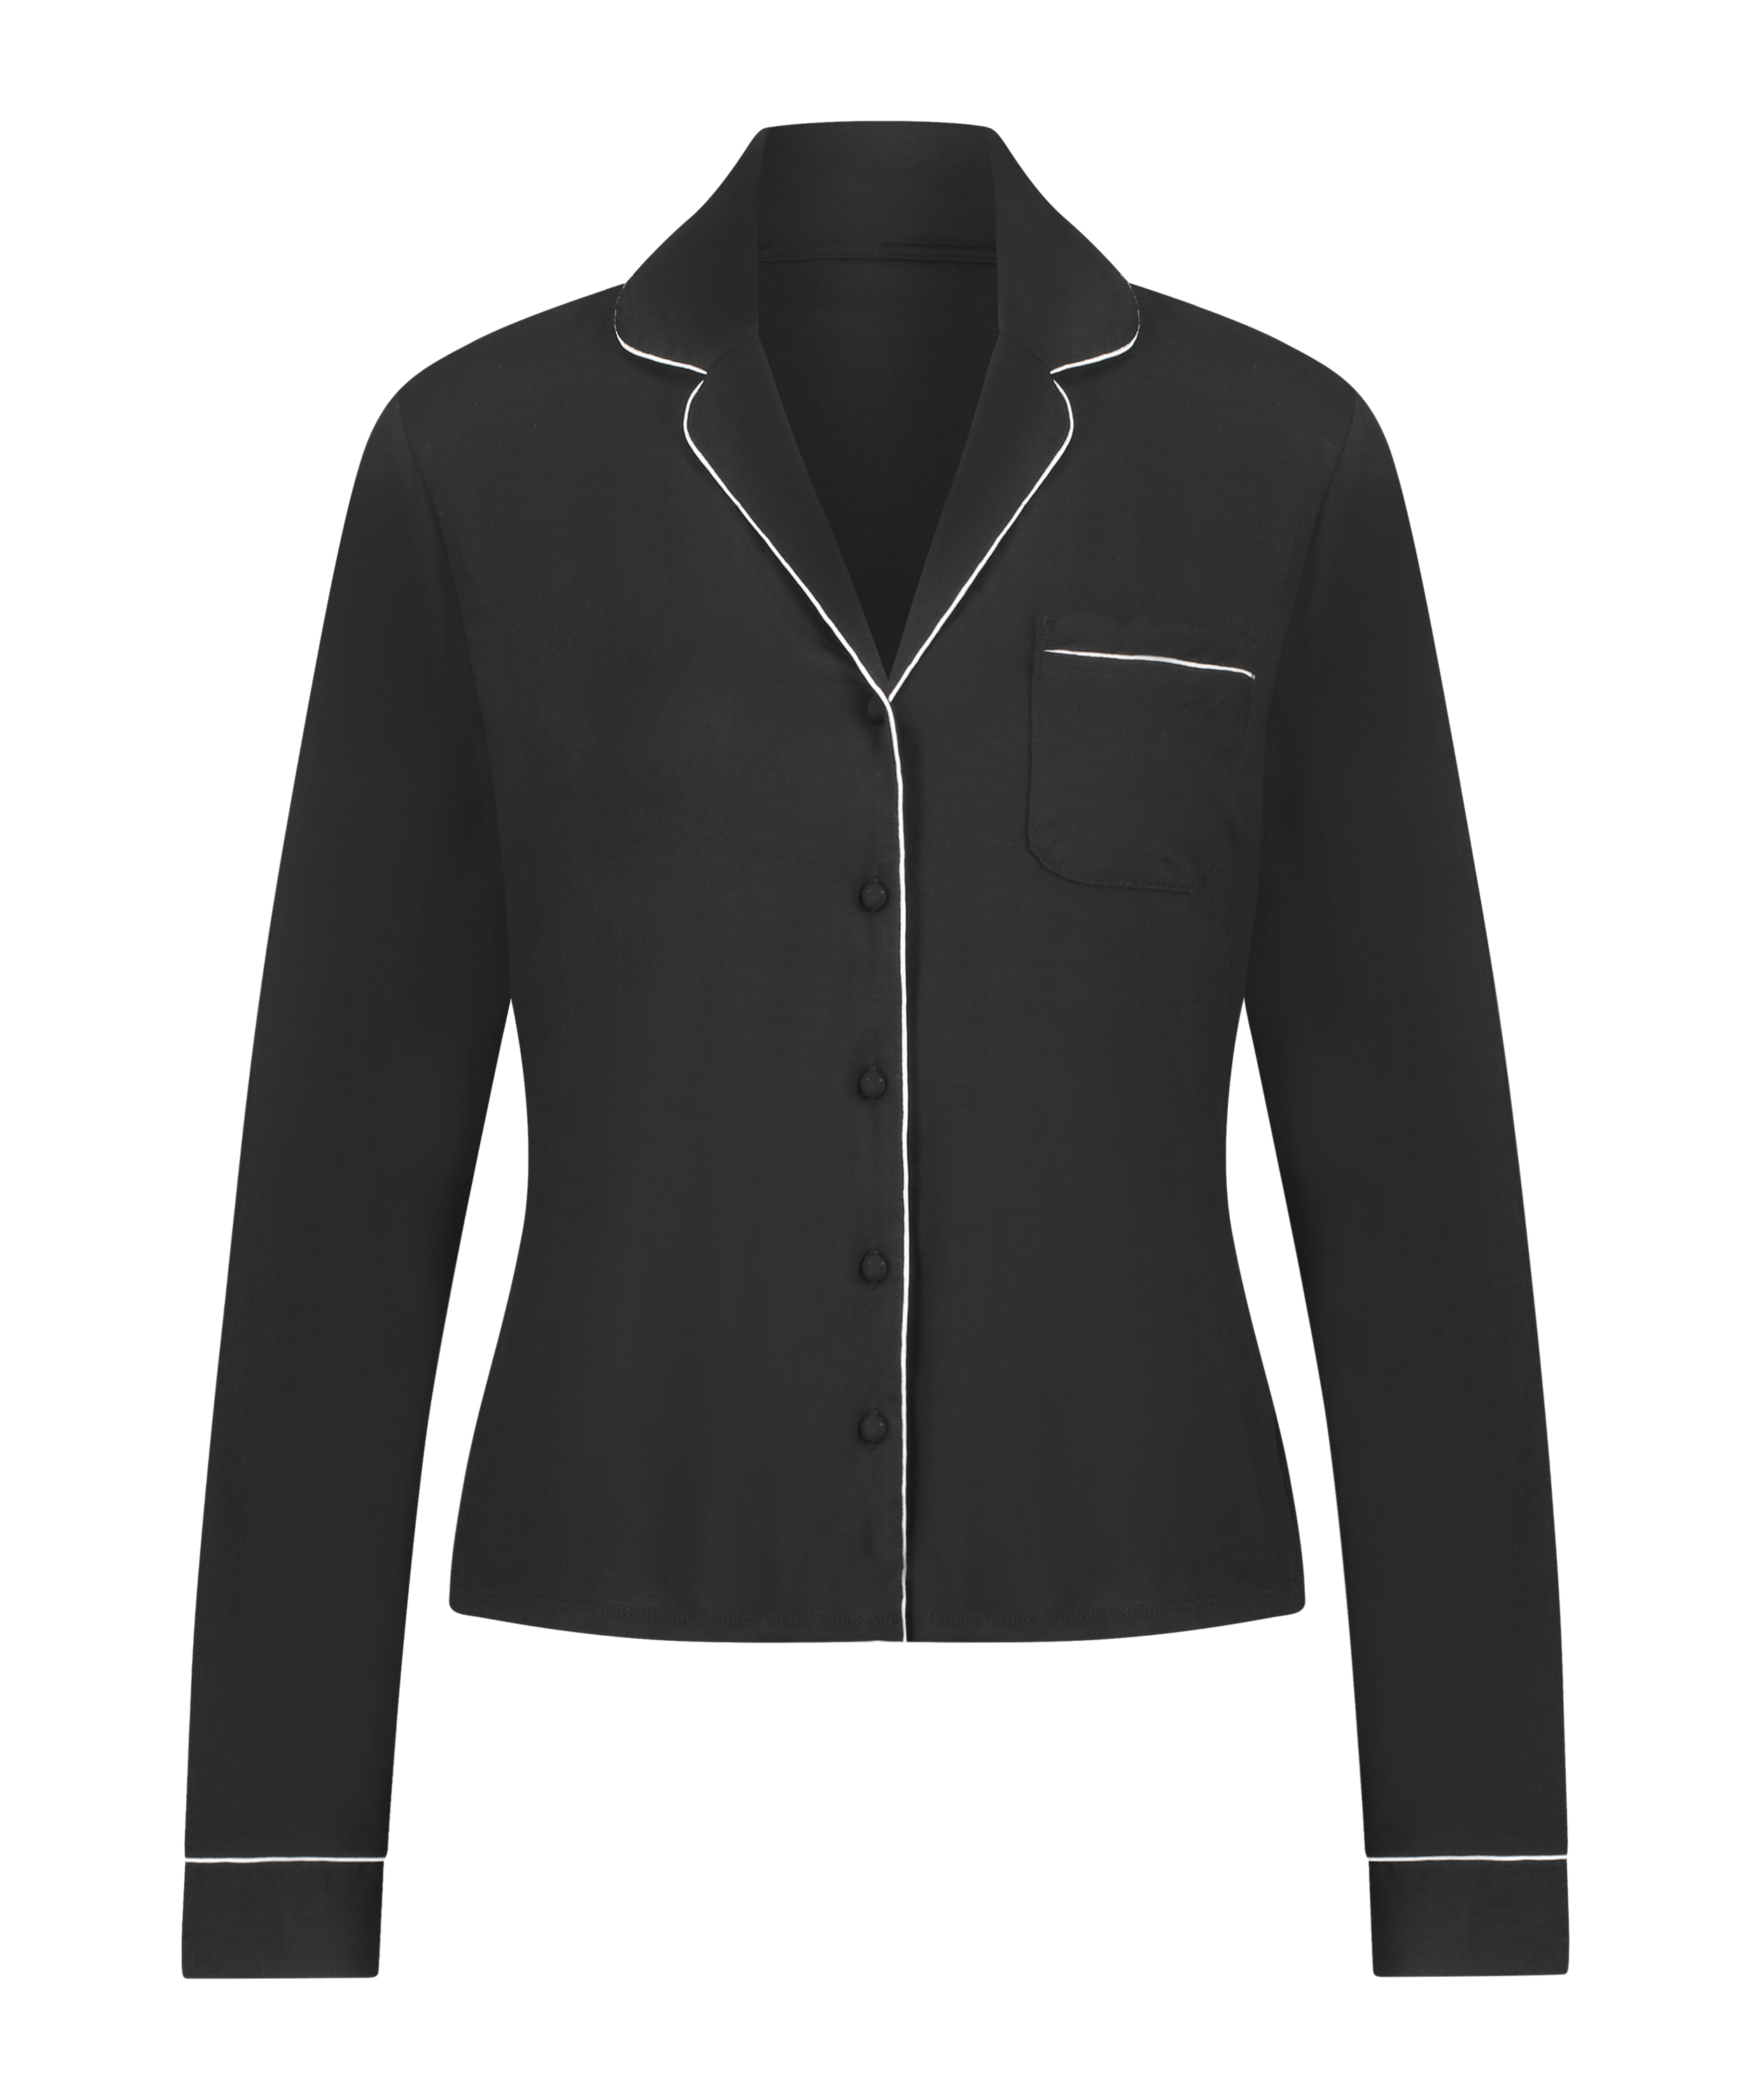 Essential Jersey Long-Sleeved Jacket, Black, main